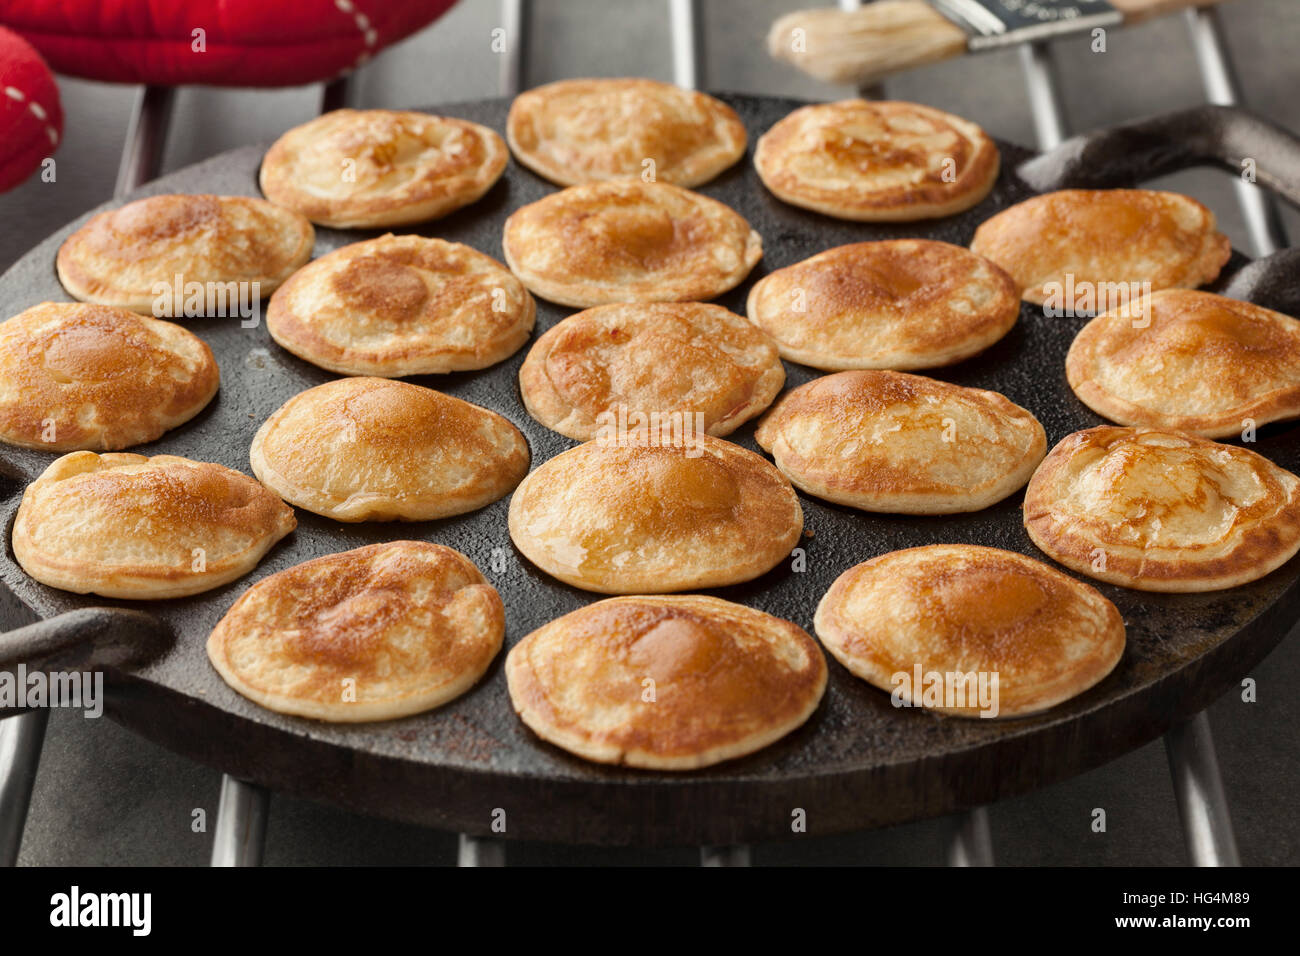 https://c8.alamy.com/comp/HG4M89/baking-dutch-mini-pancakes-called-poffertjes-in-a-special-skillet-HG4M89.jpg